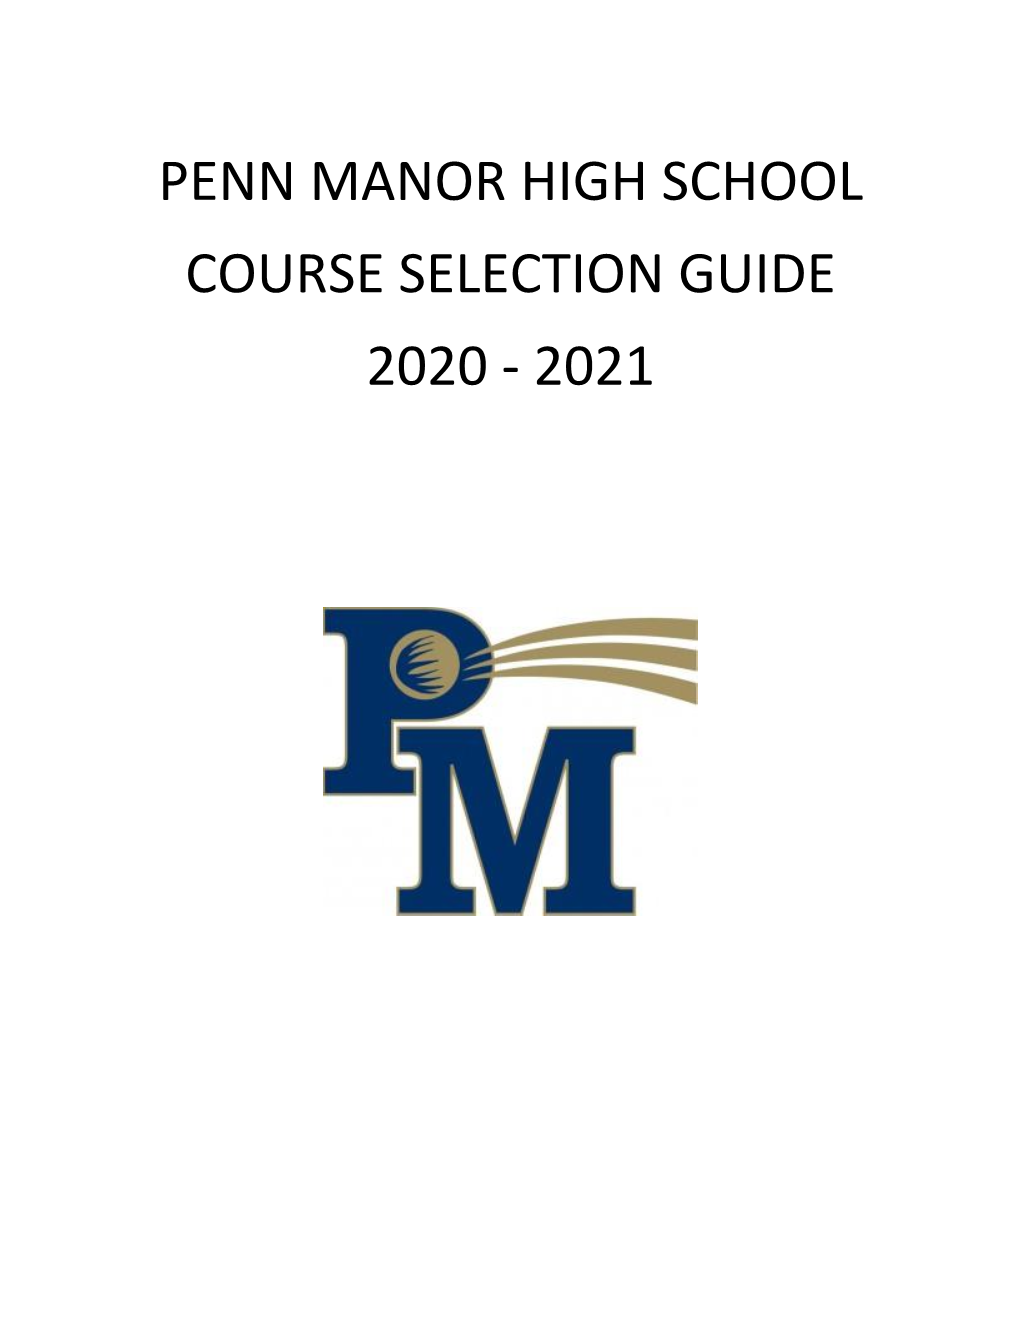 Penn Manor High School Course Selection Guide 2020 - 2021